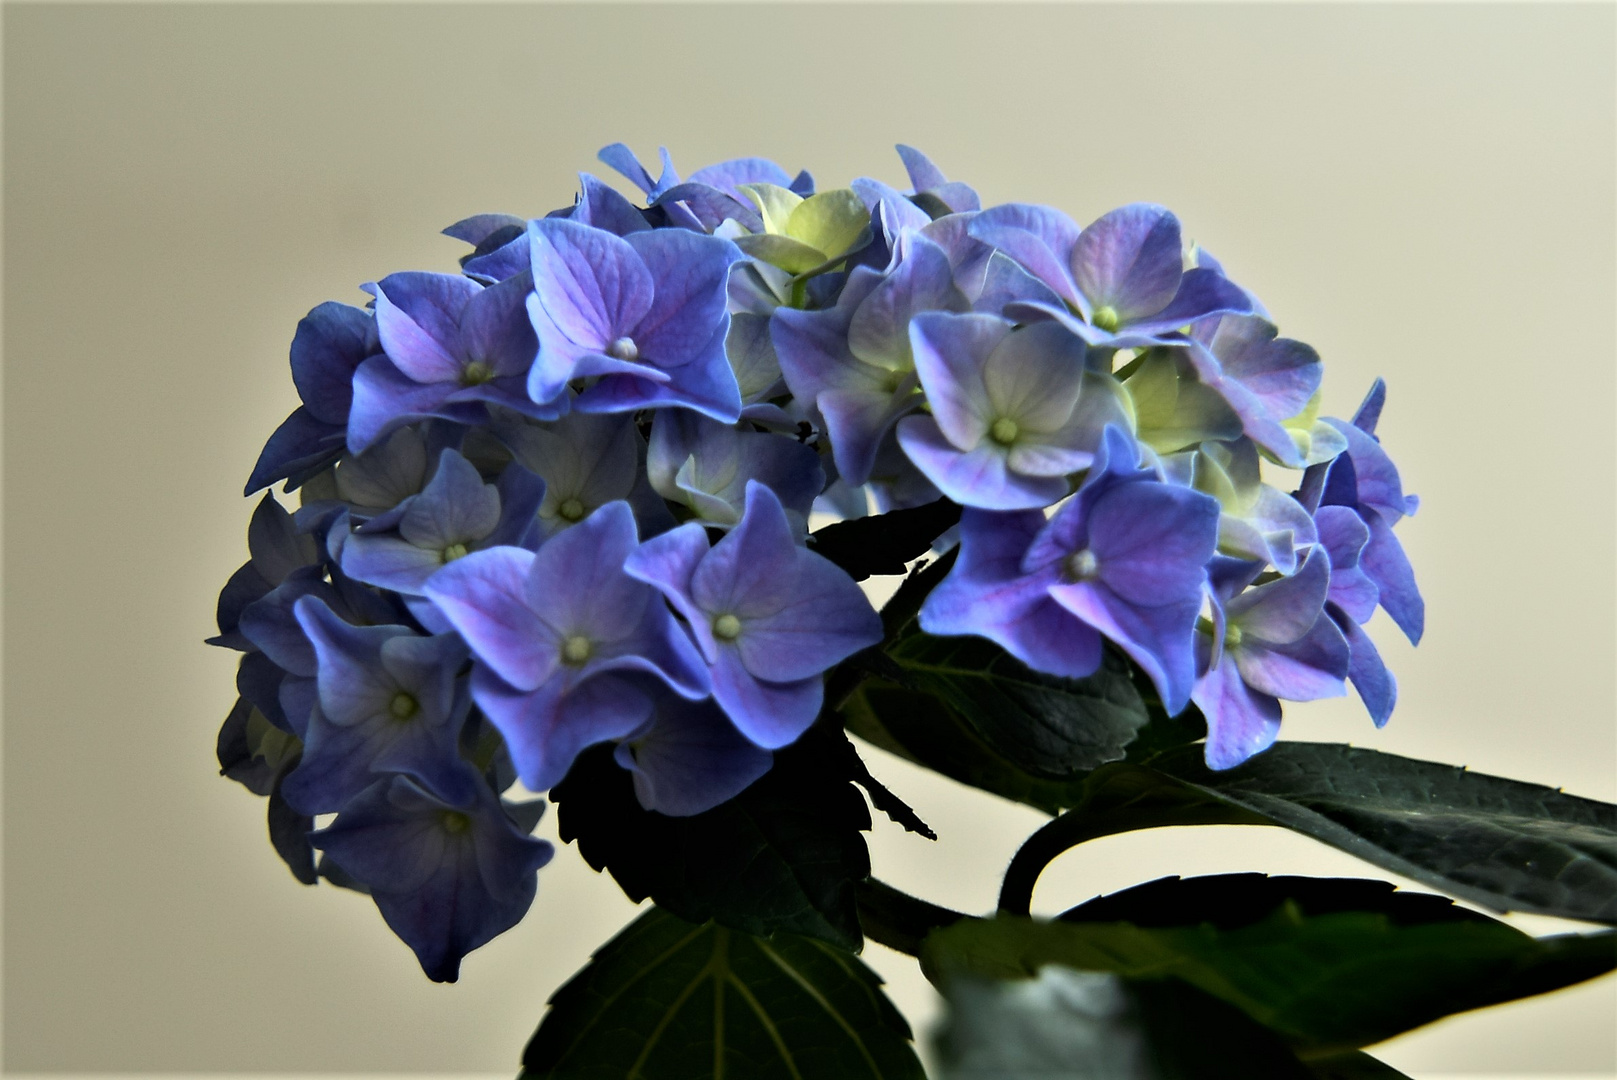 Blau meine Lieblingsfarbe,  schöne  Hortensien- Blüte